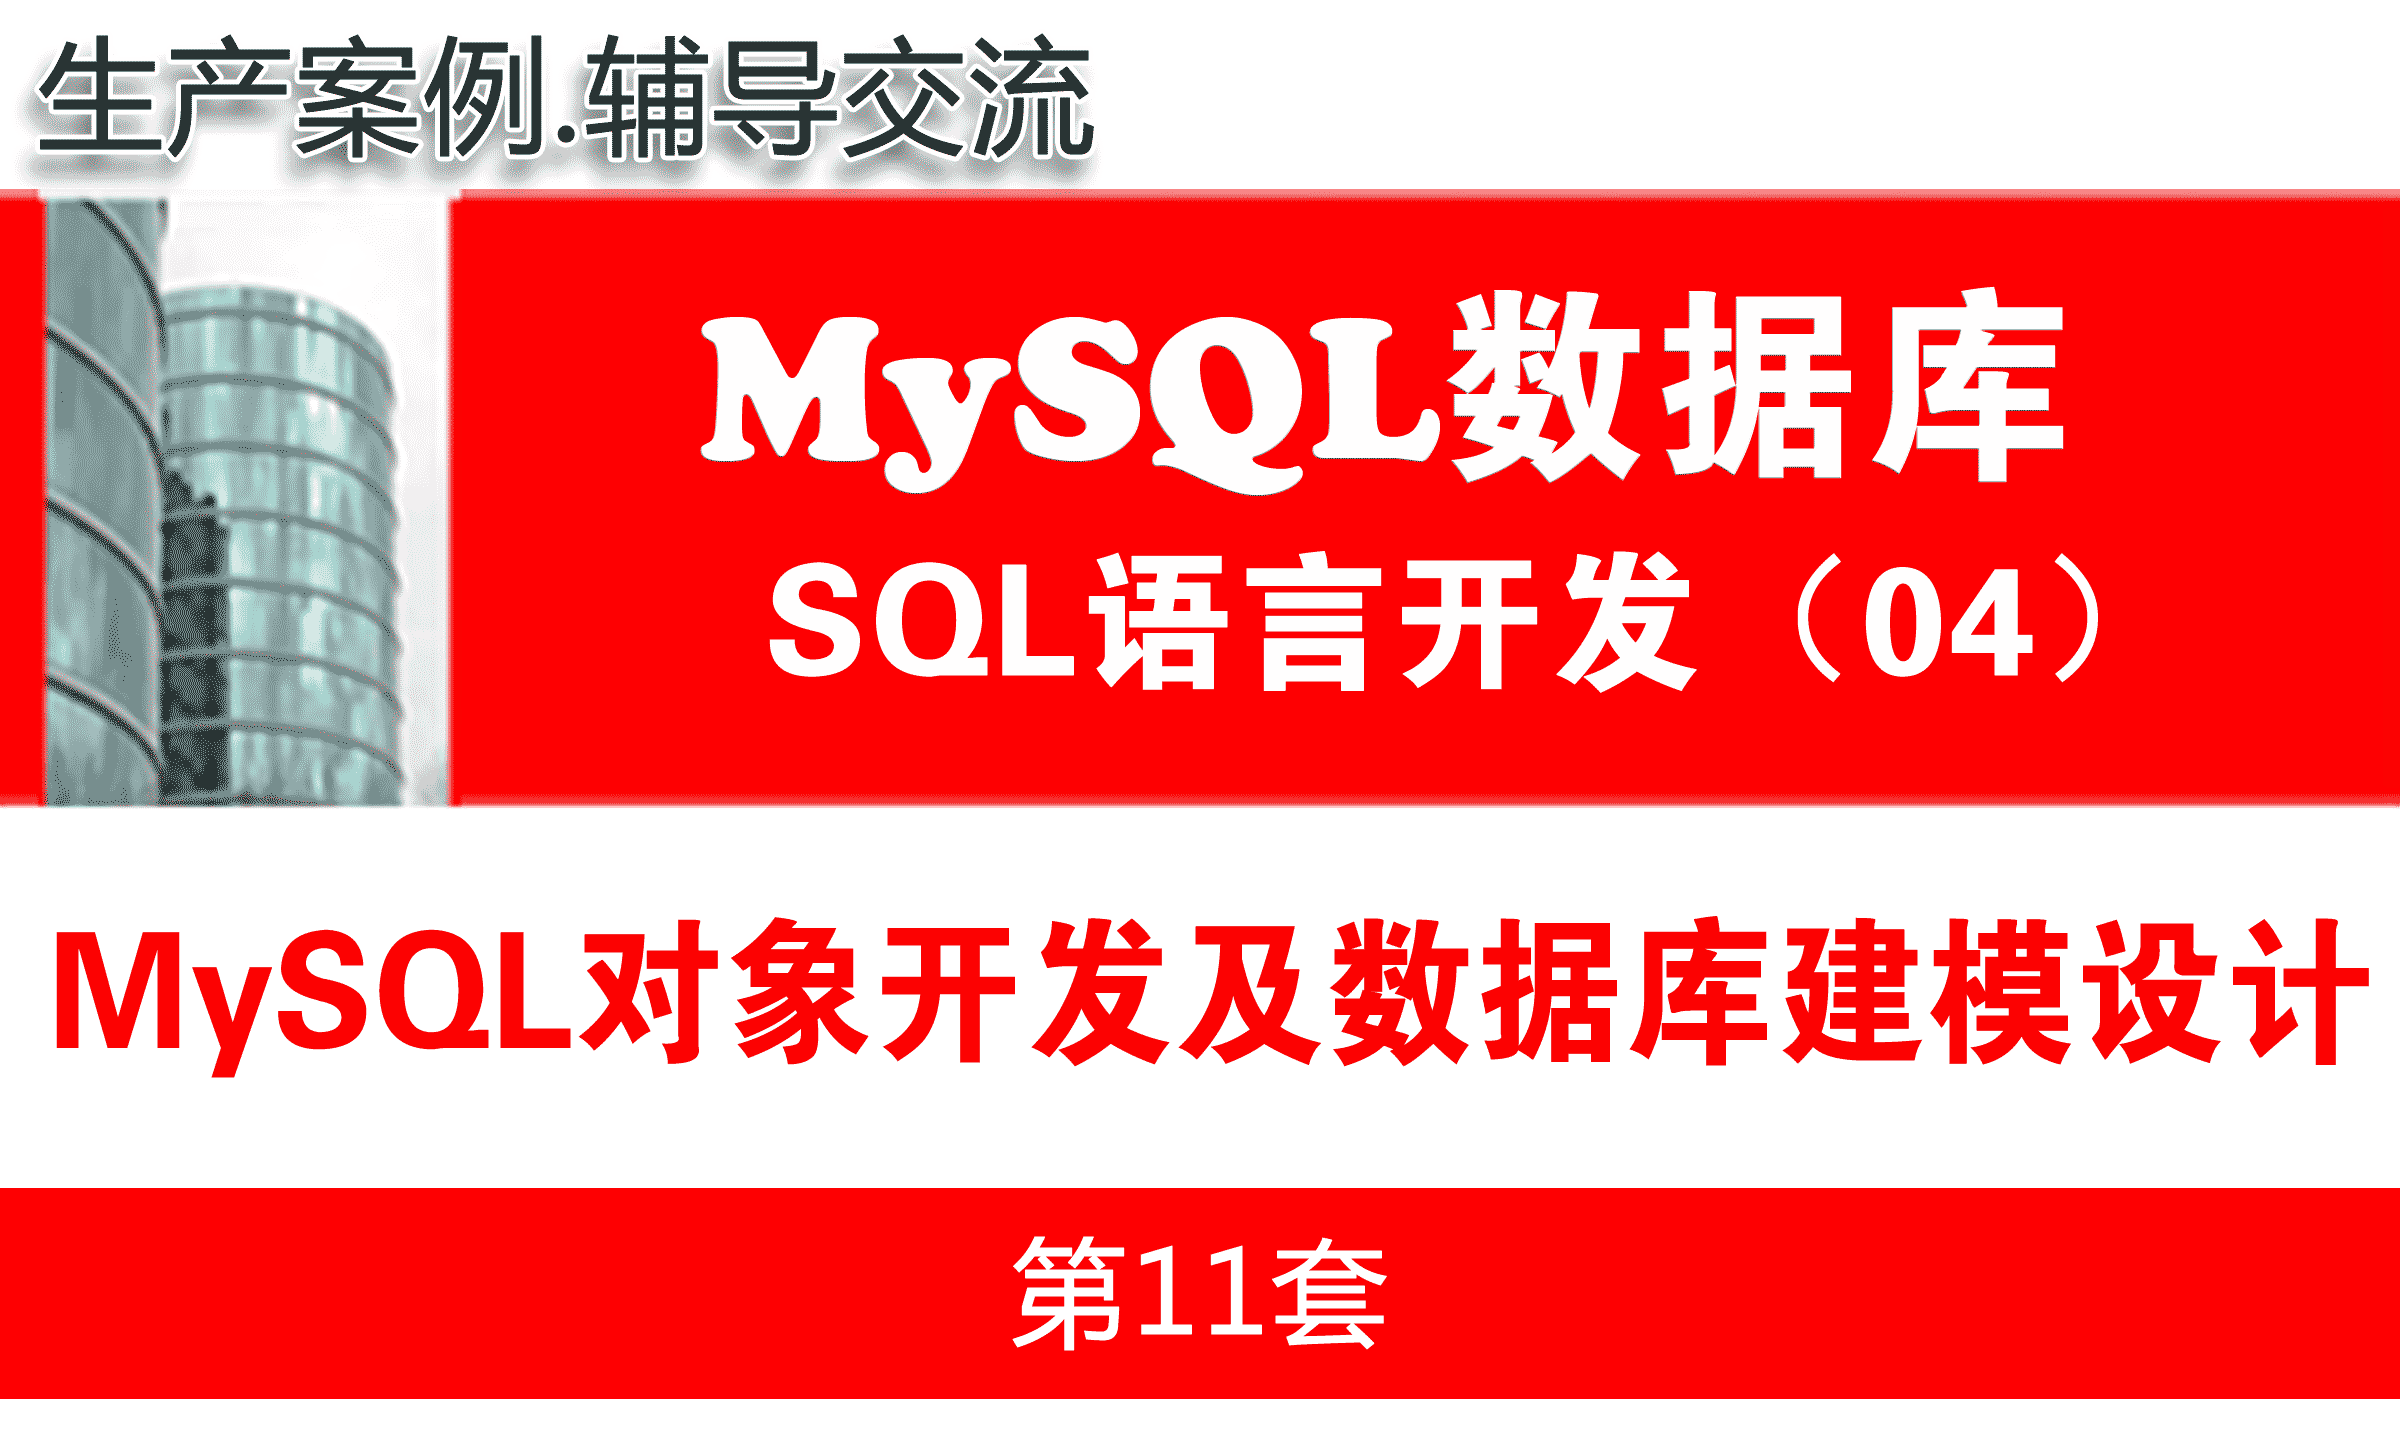 MySQL对象管理与开发及数据库建模设计_MySQL数据库SQL语言开发与应用实战04